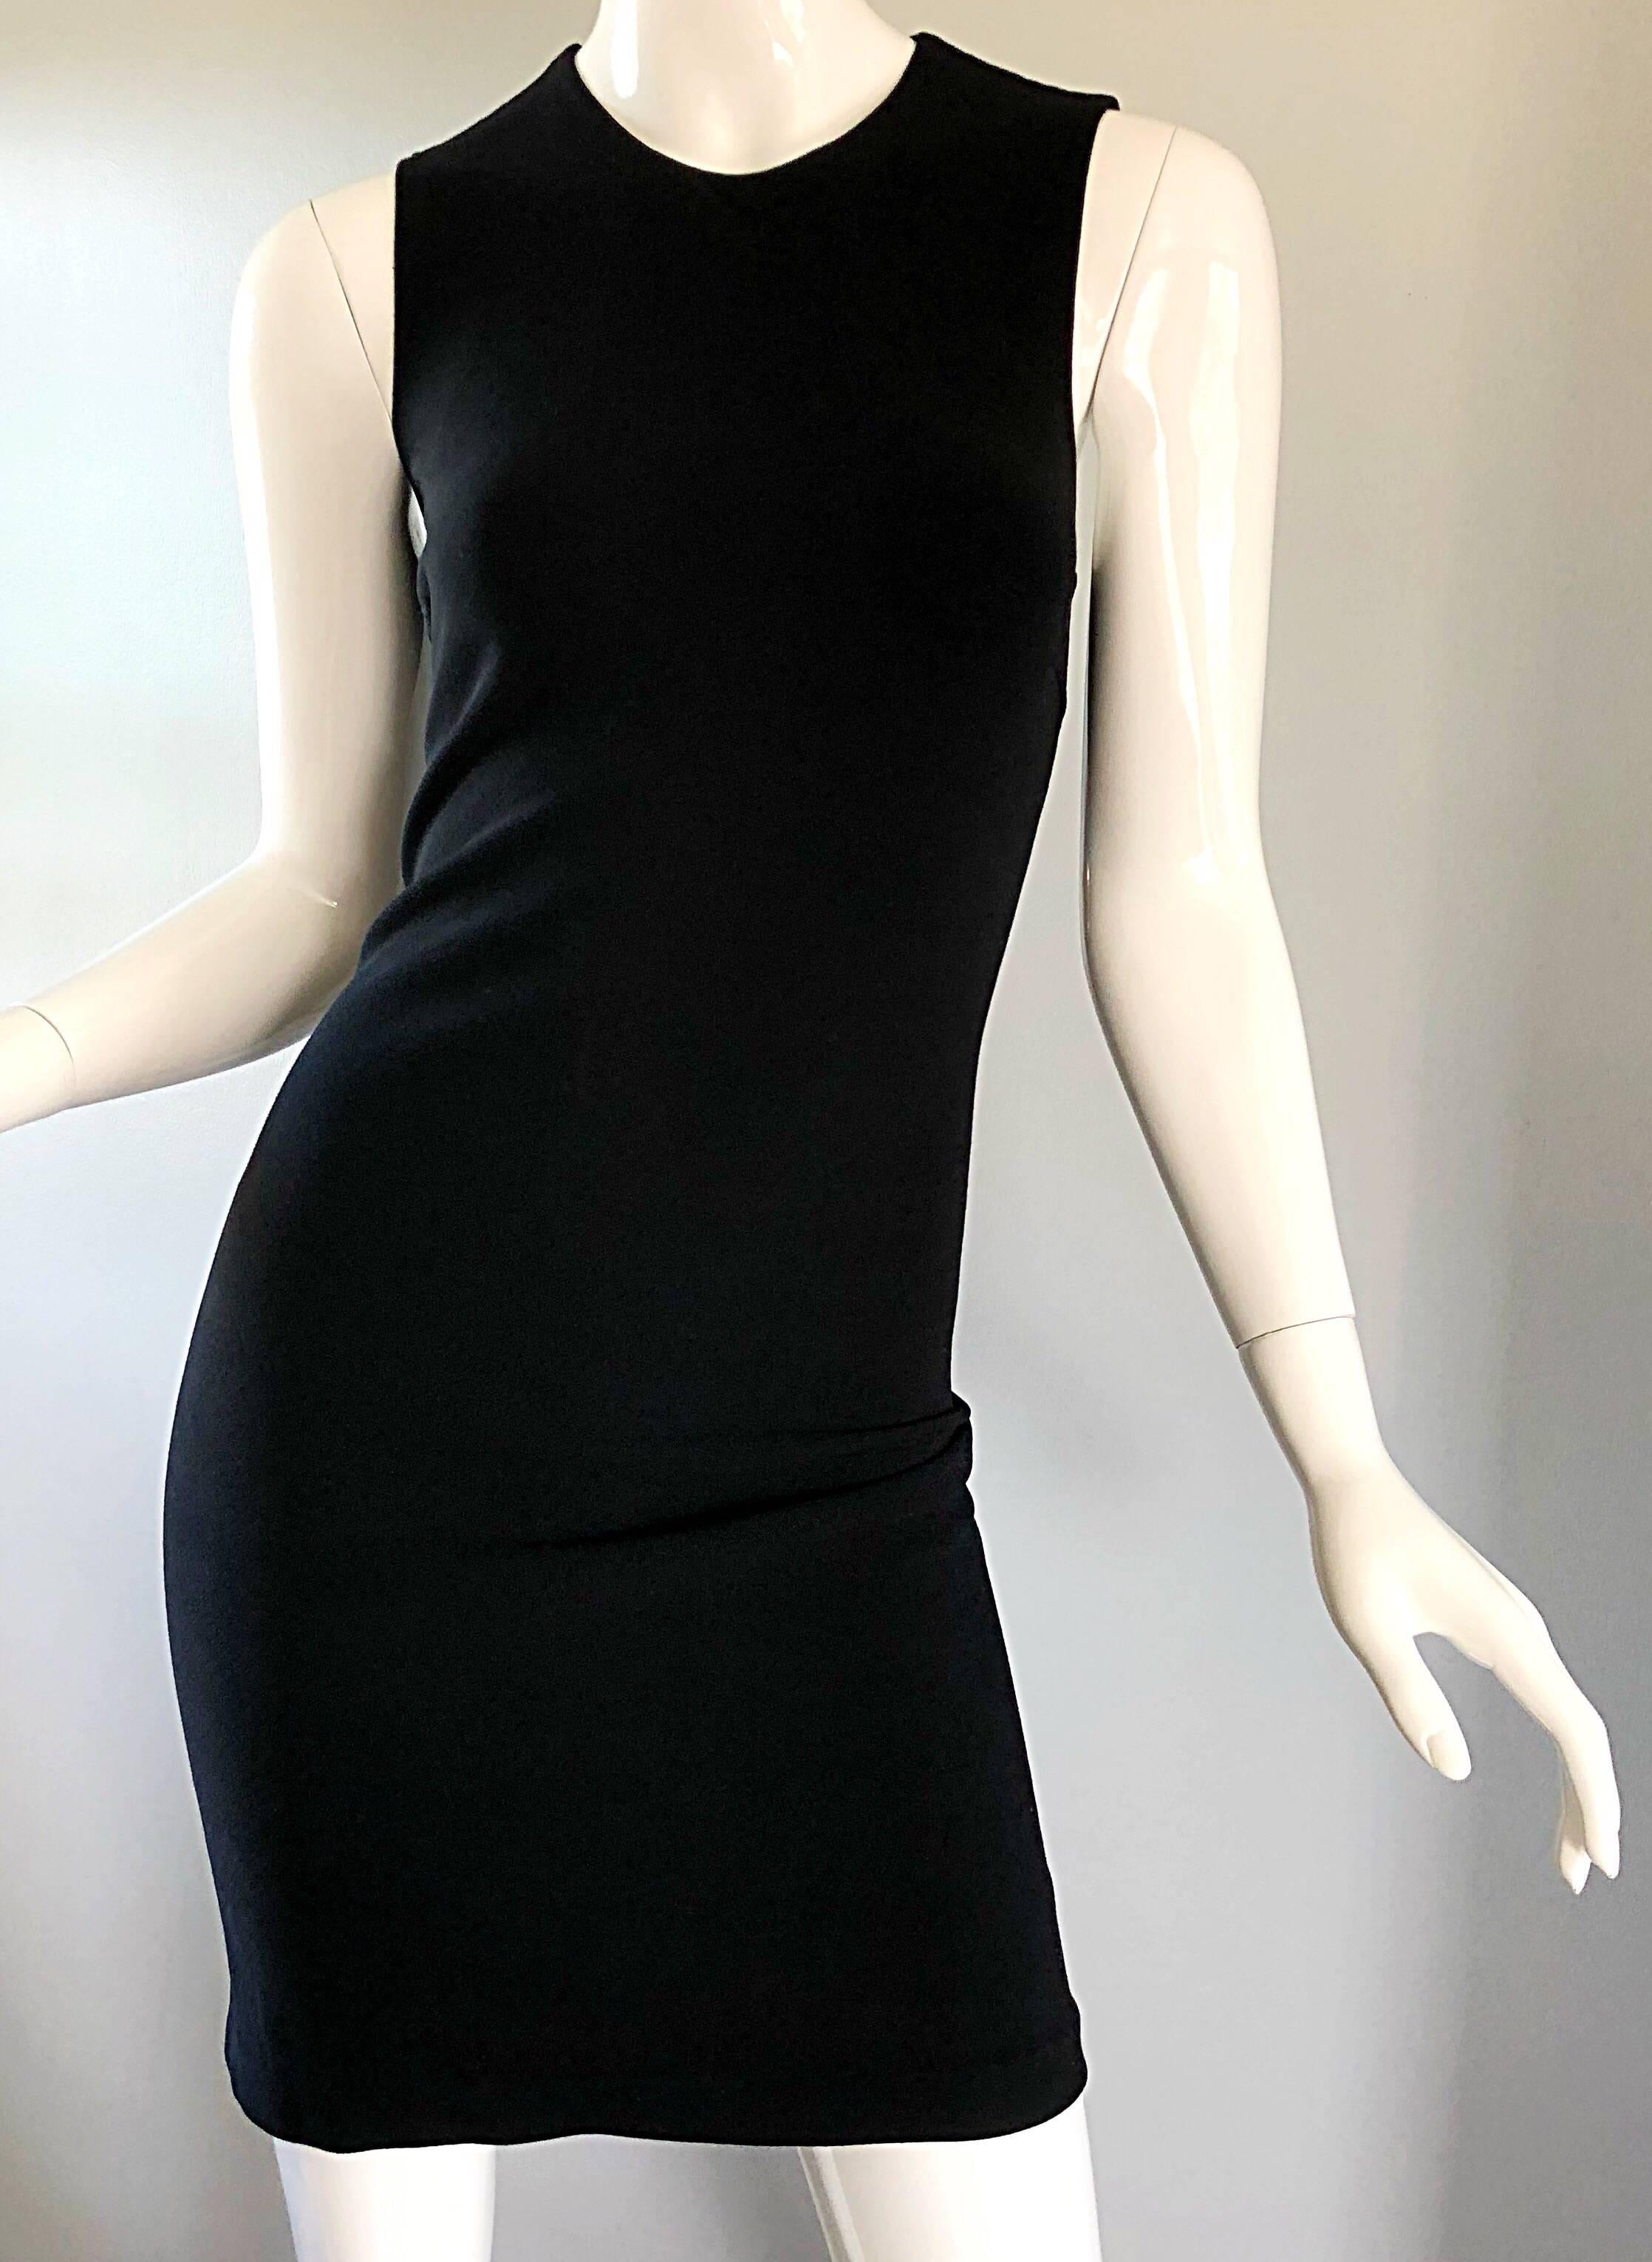 black dress size 2